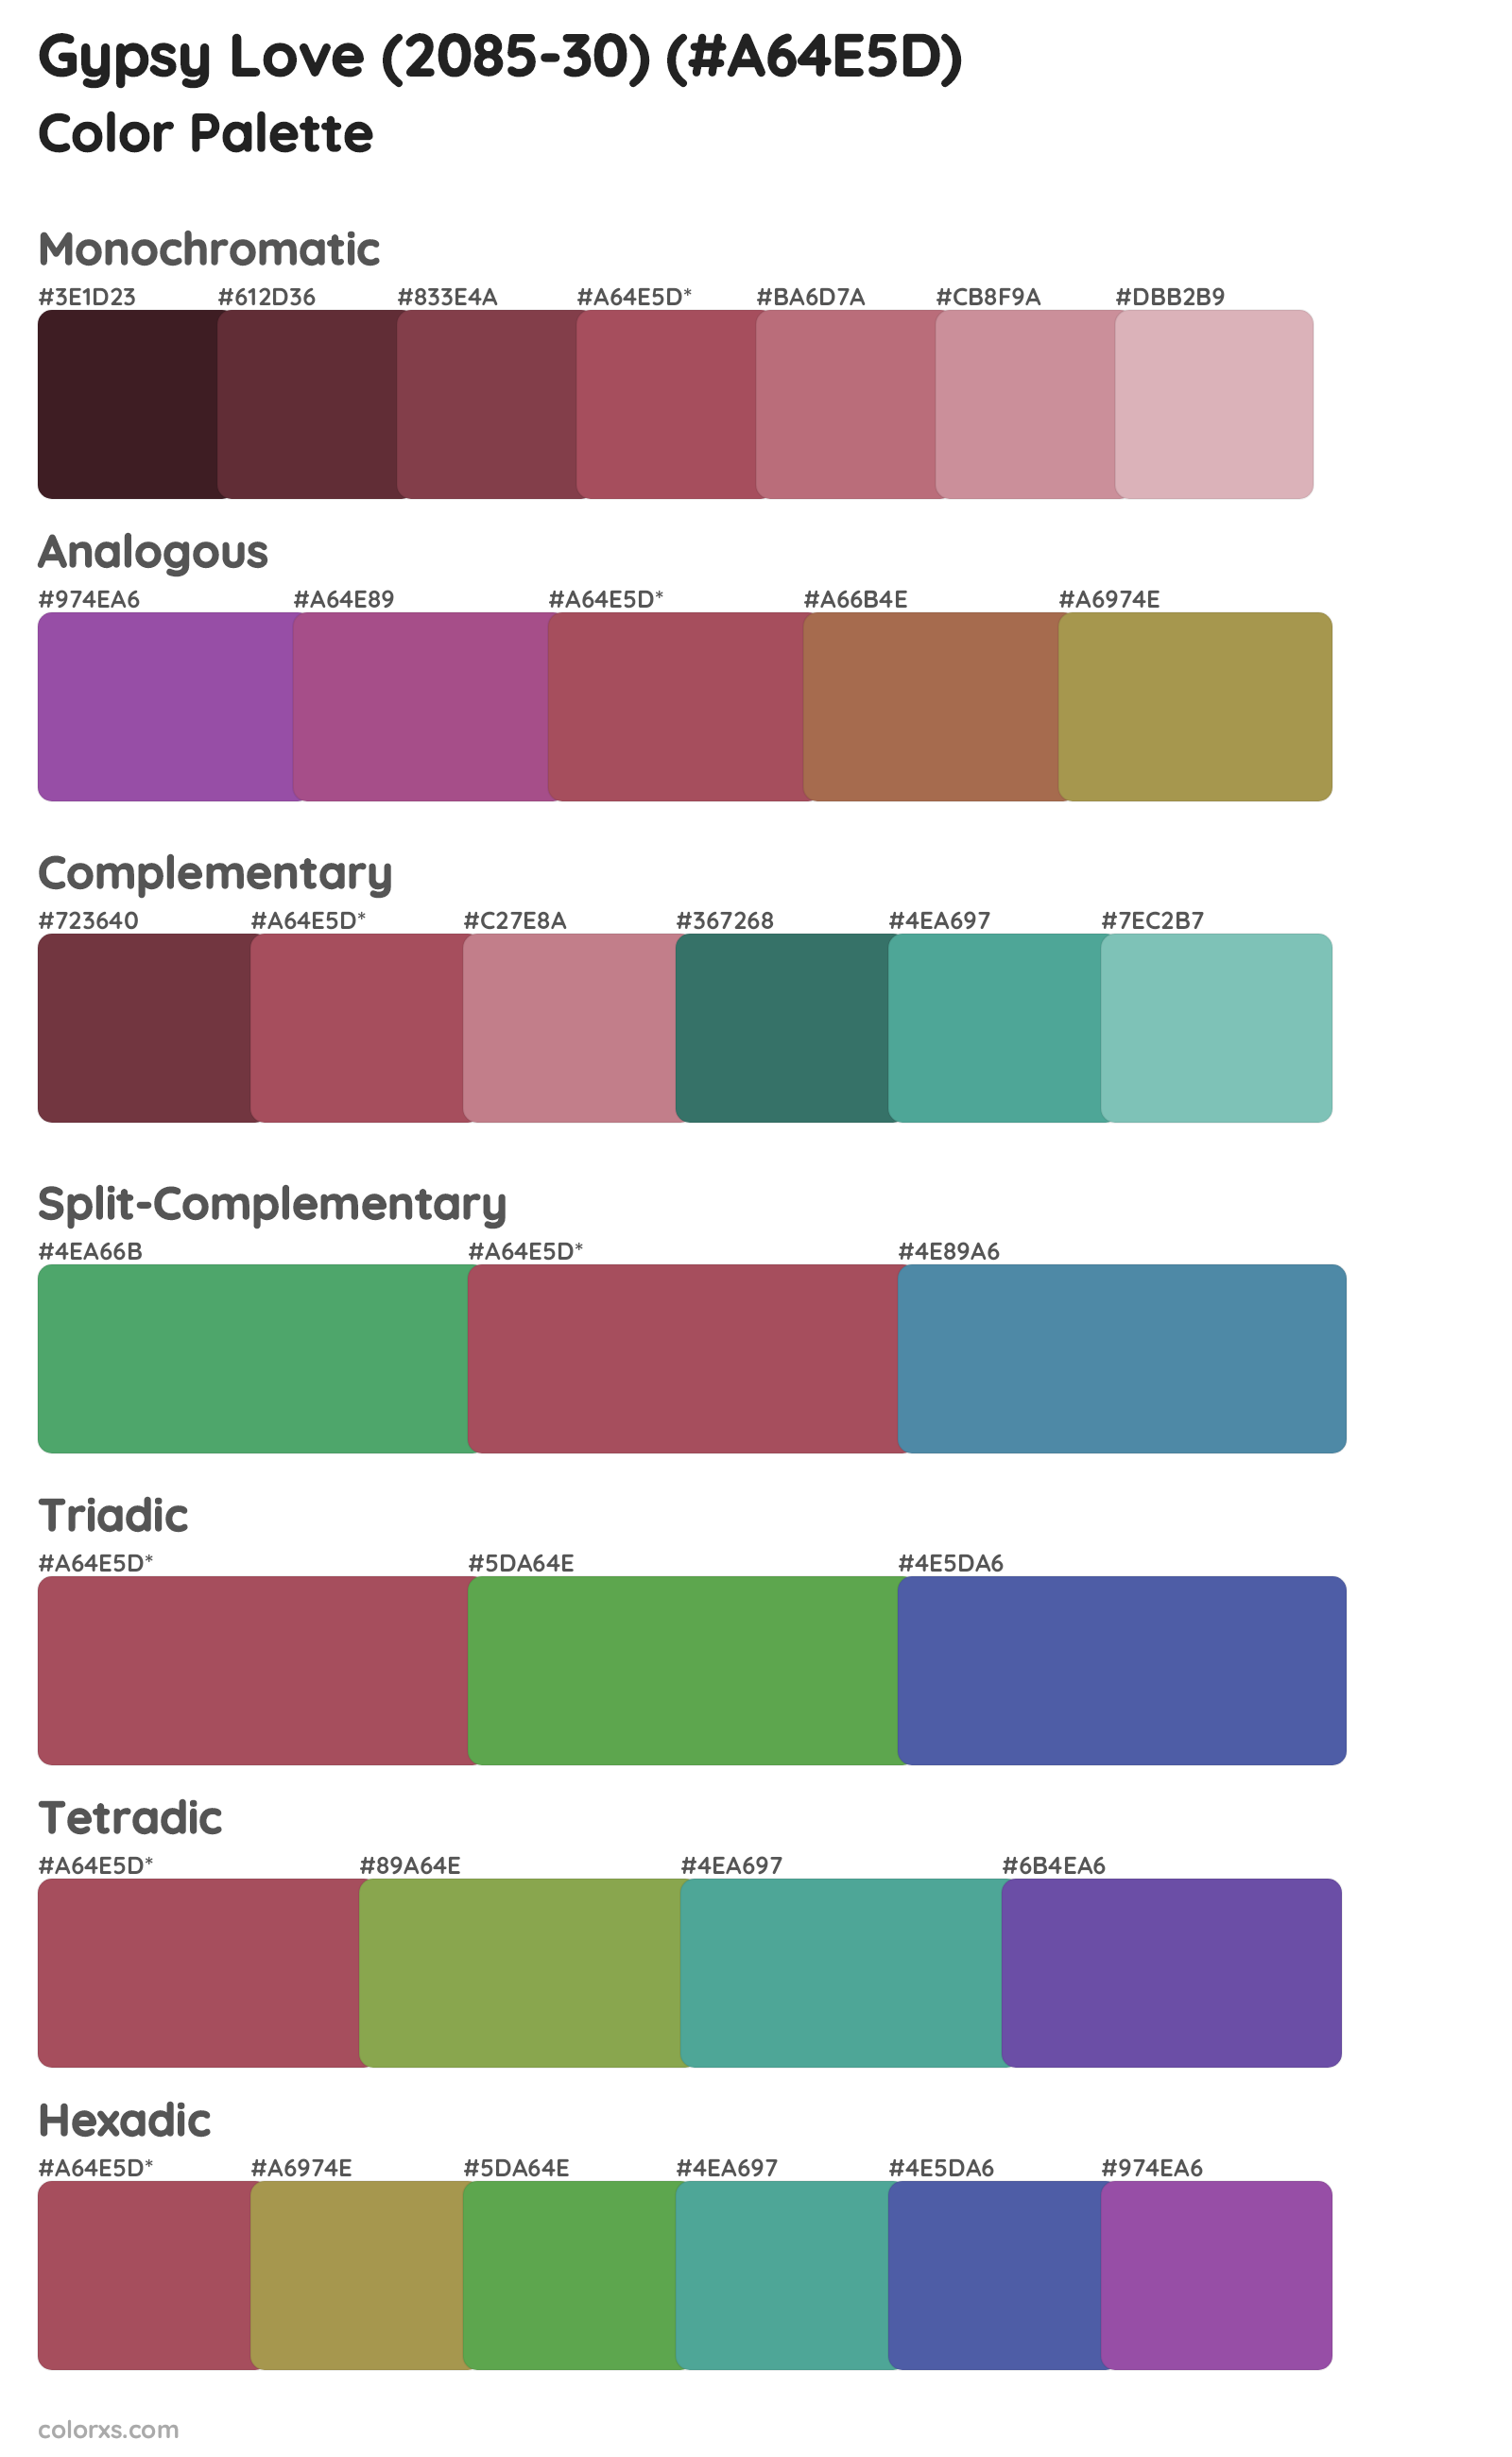 Gypsy Love (2085-30) Color Scheme Palettes